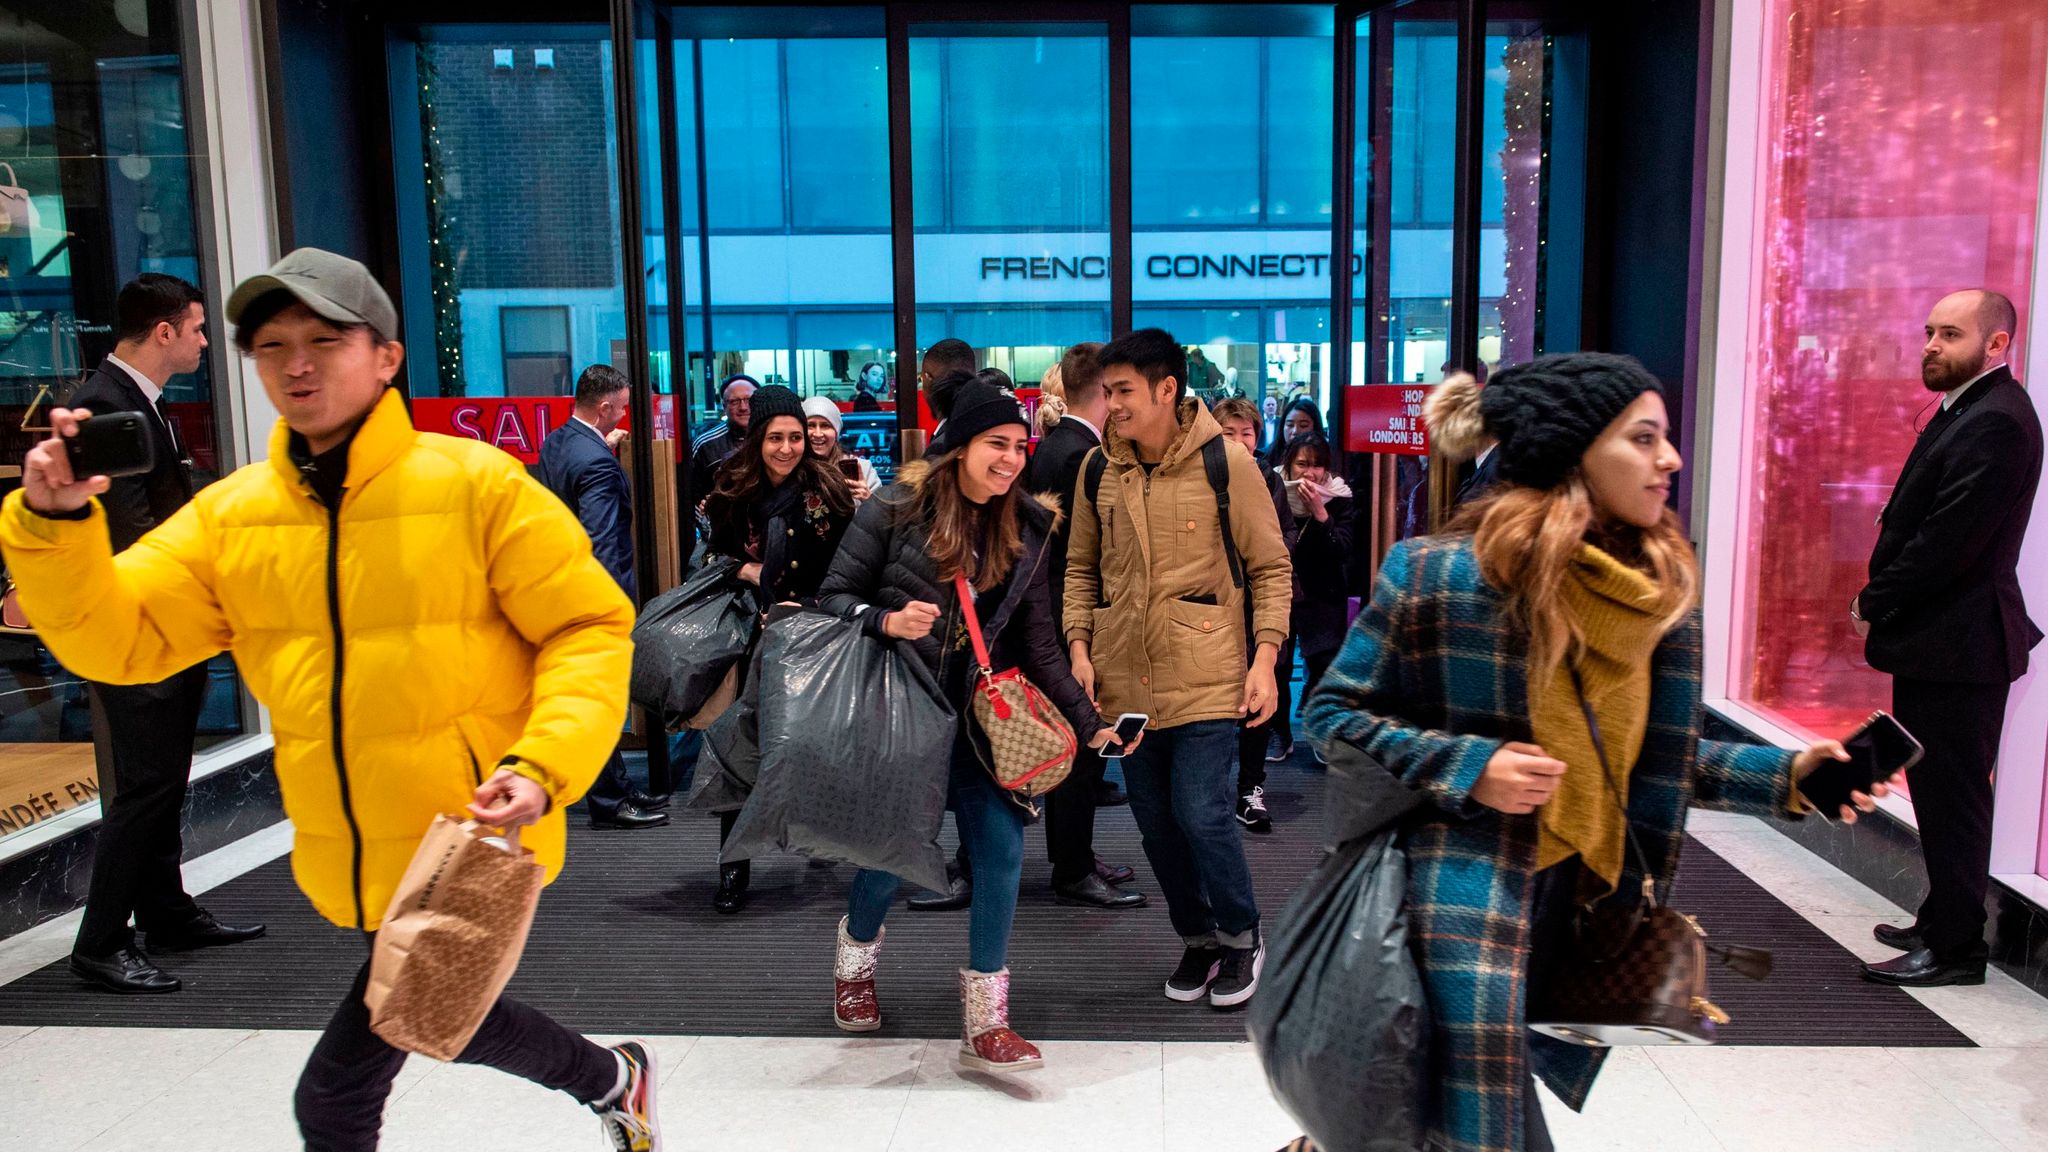 Shoppers queue outside Selfridges on Oxford Street, London before